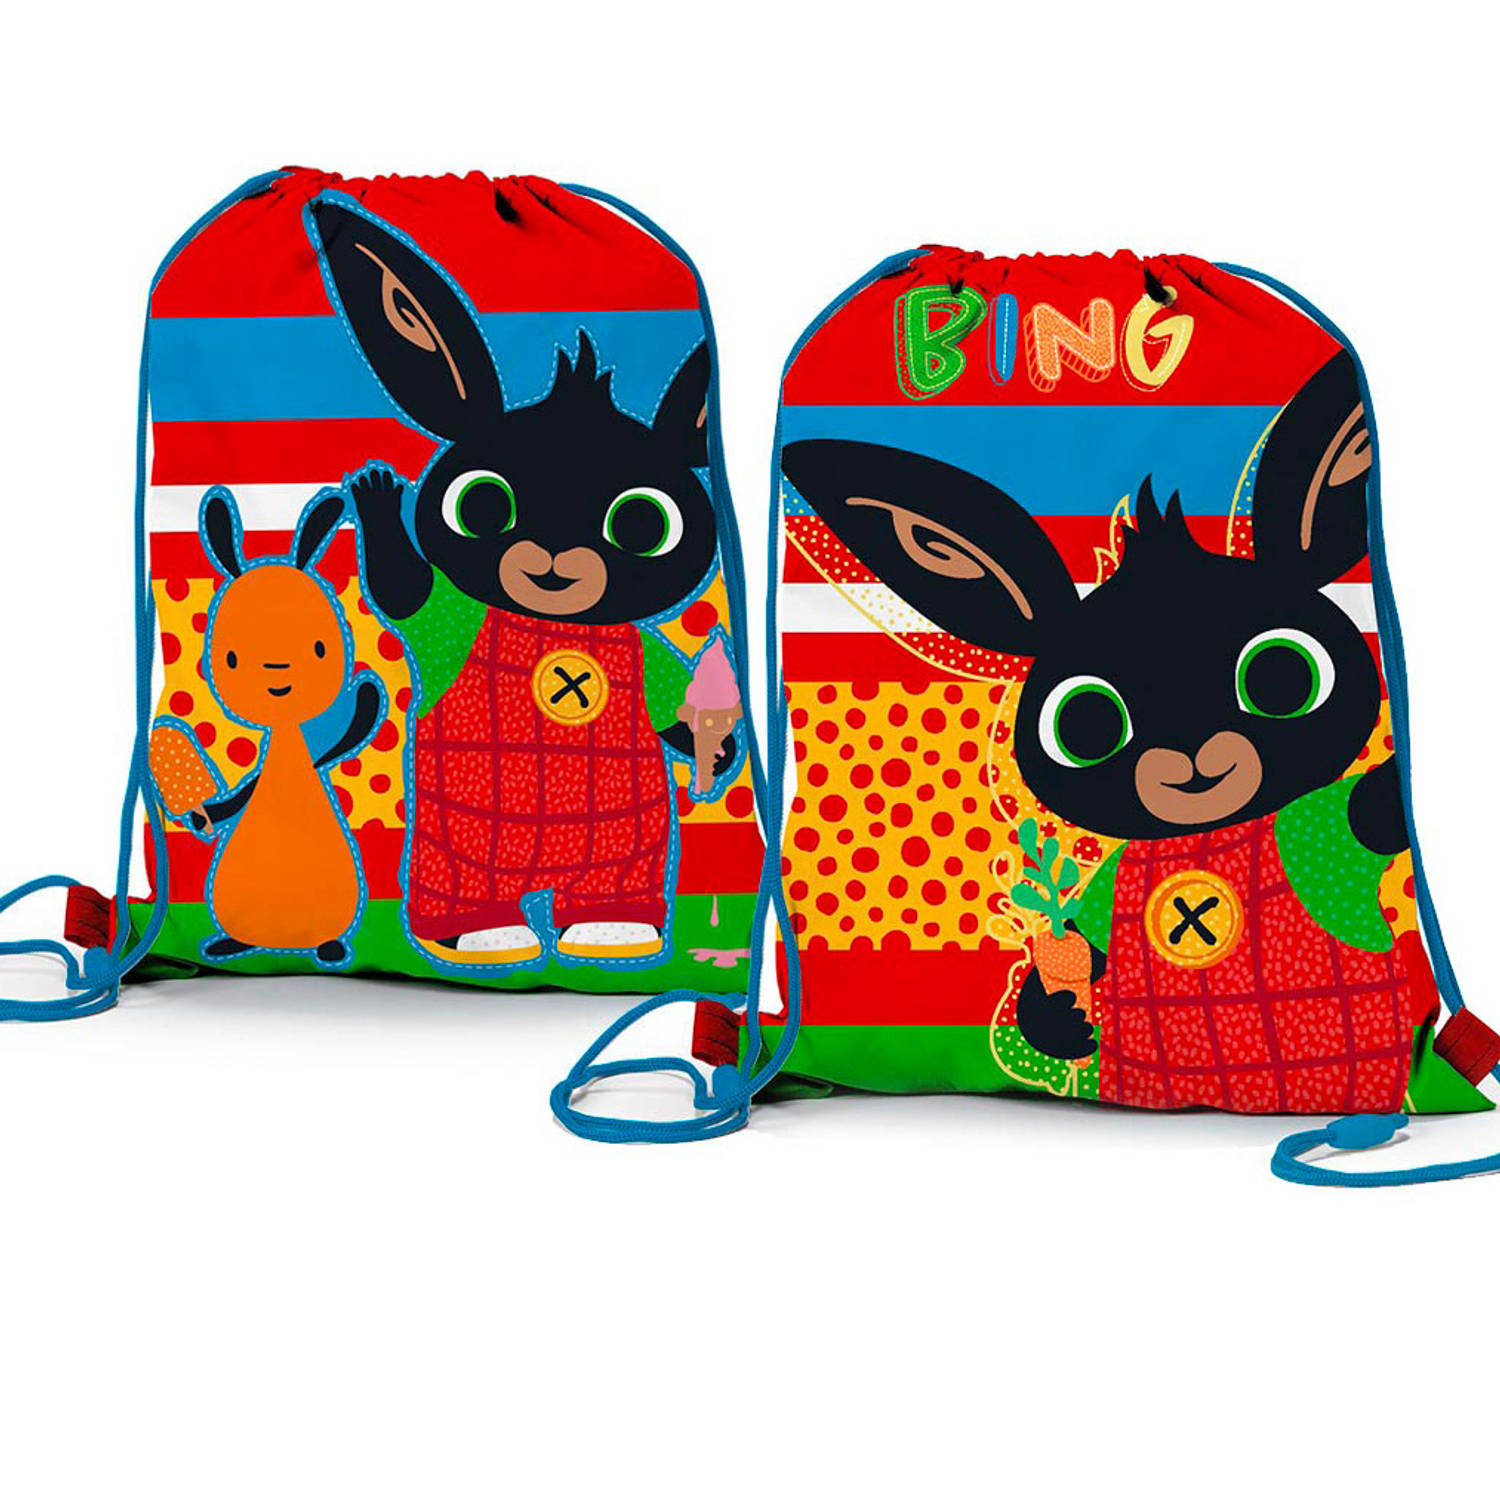 Bing Bunny Gymbag, Color Fun - 38 x 30 cm - Polyester